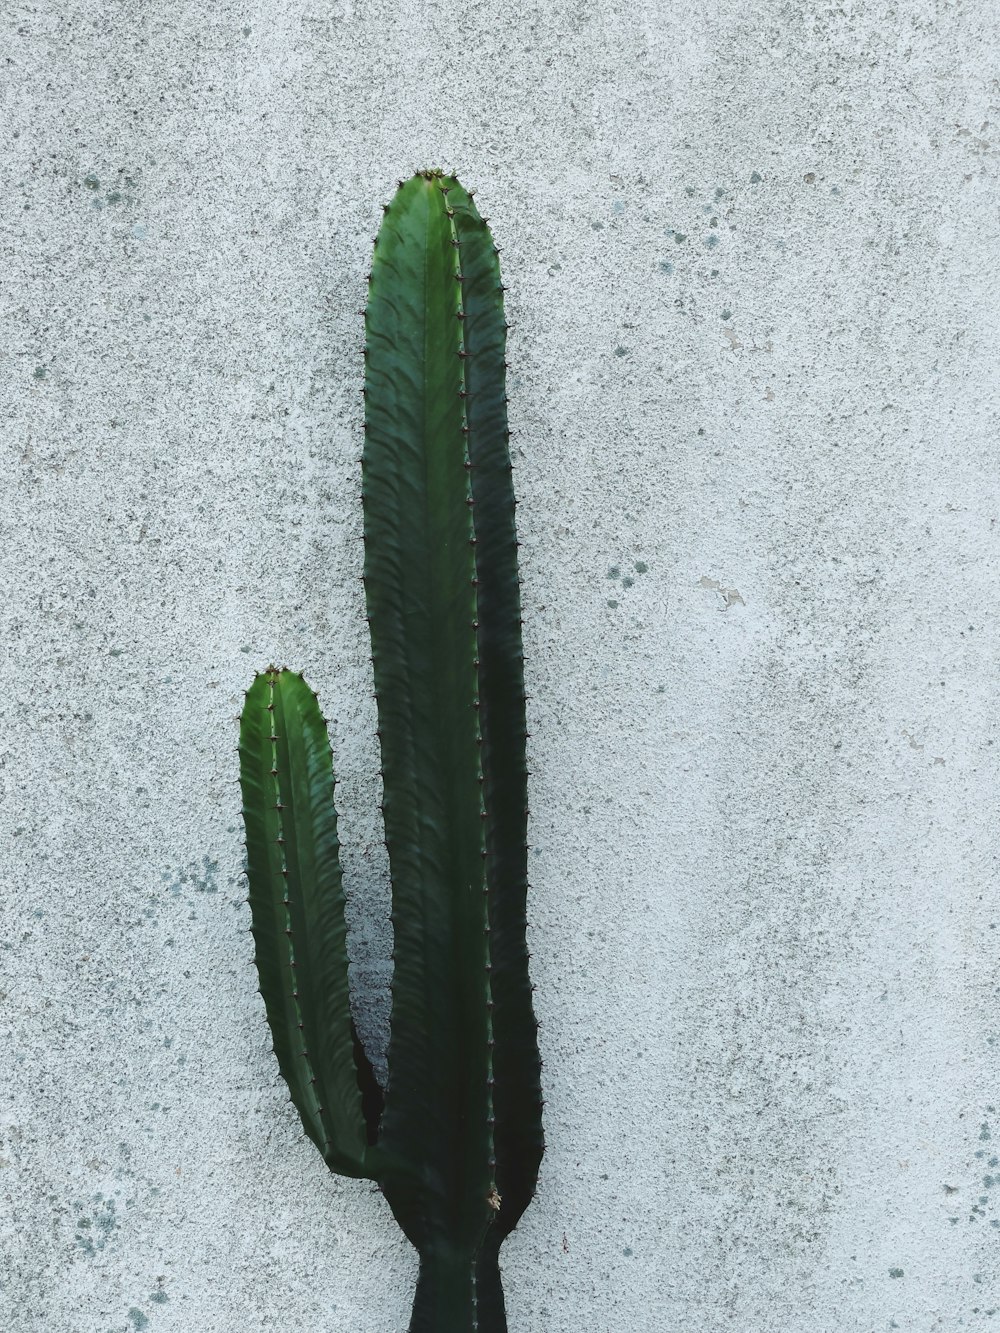 cactus verde su pavimento di cemento grigio